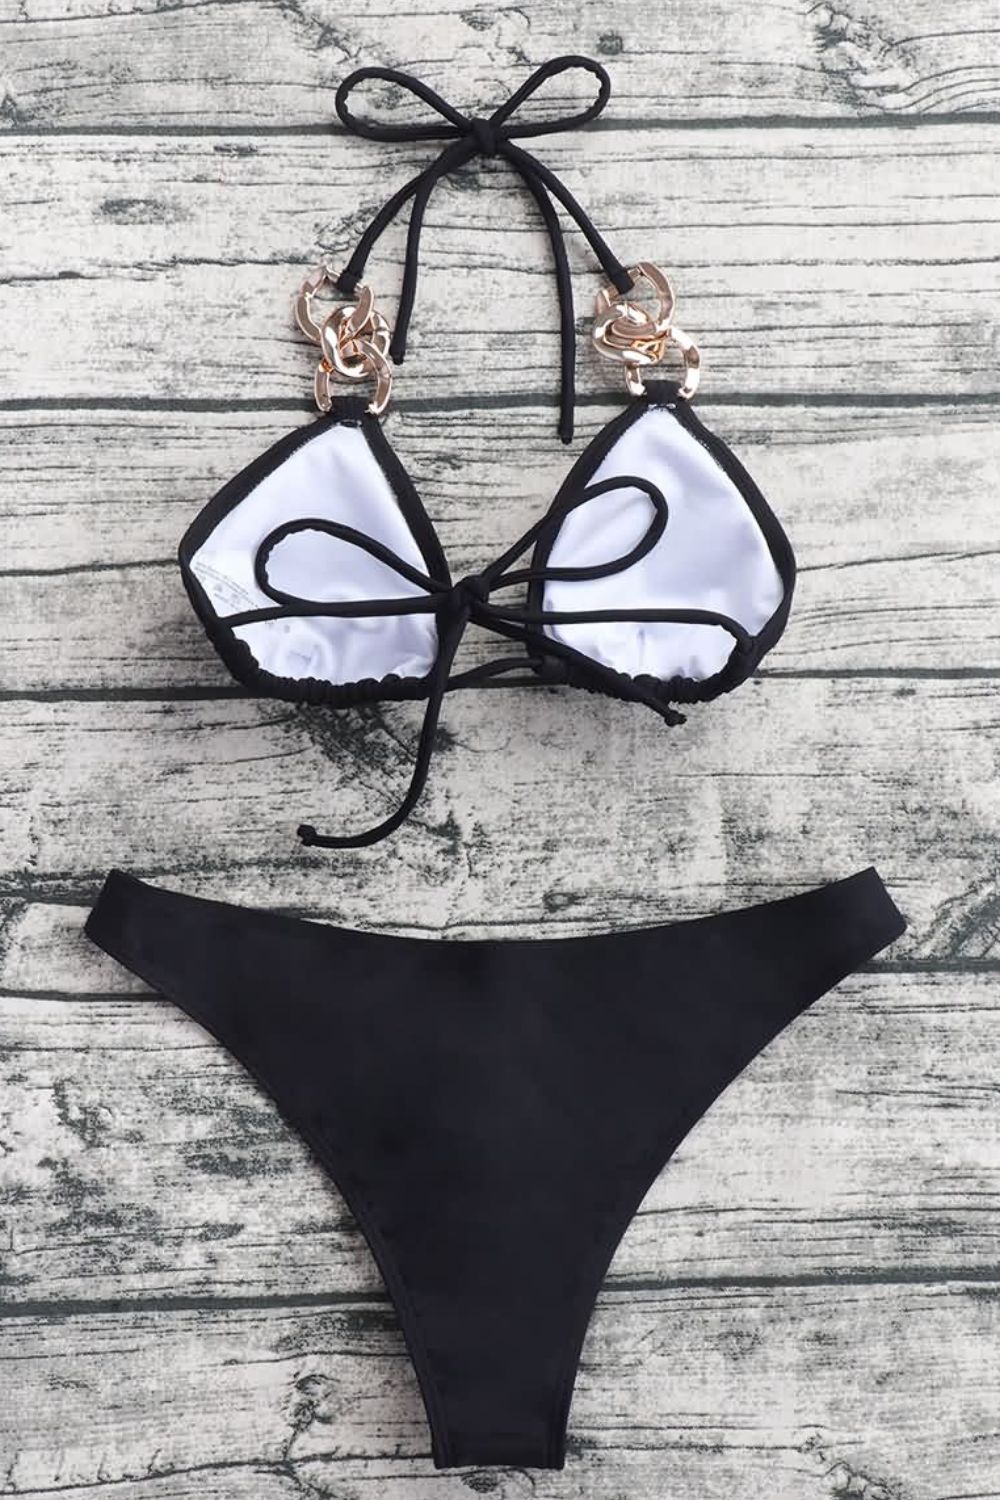 👙 Sexy Chain Detailed Black & Gold Halter Top Bikini Set 👙